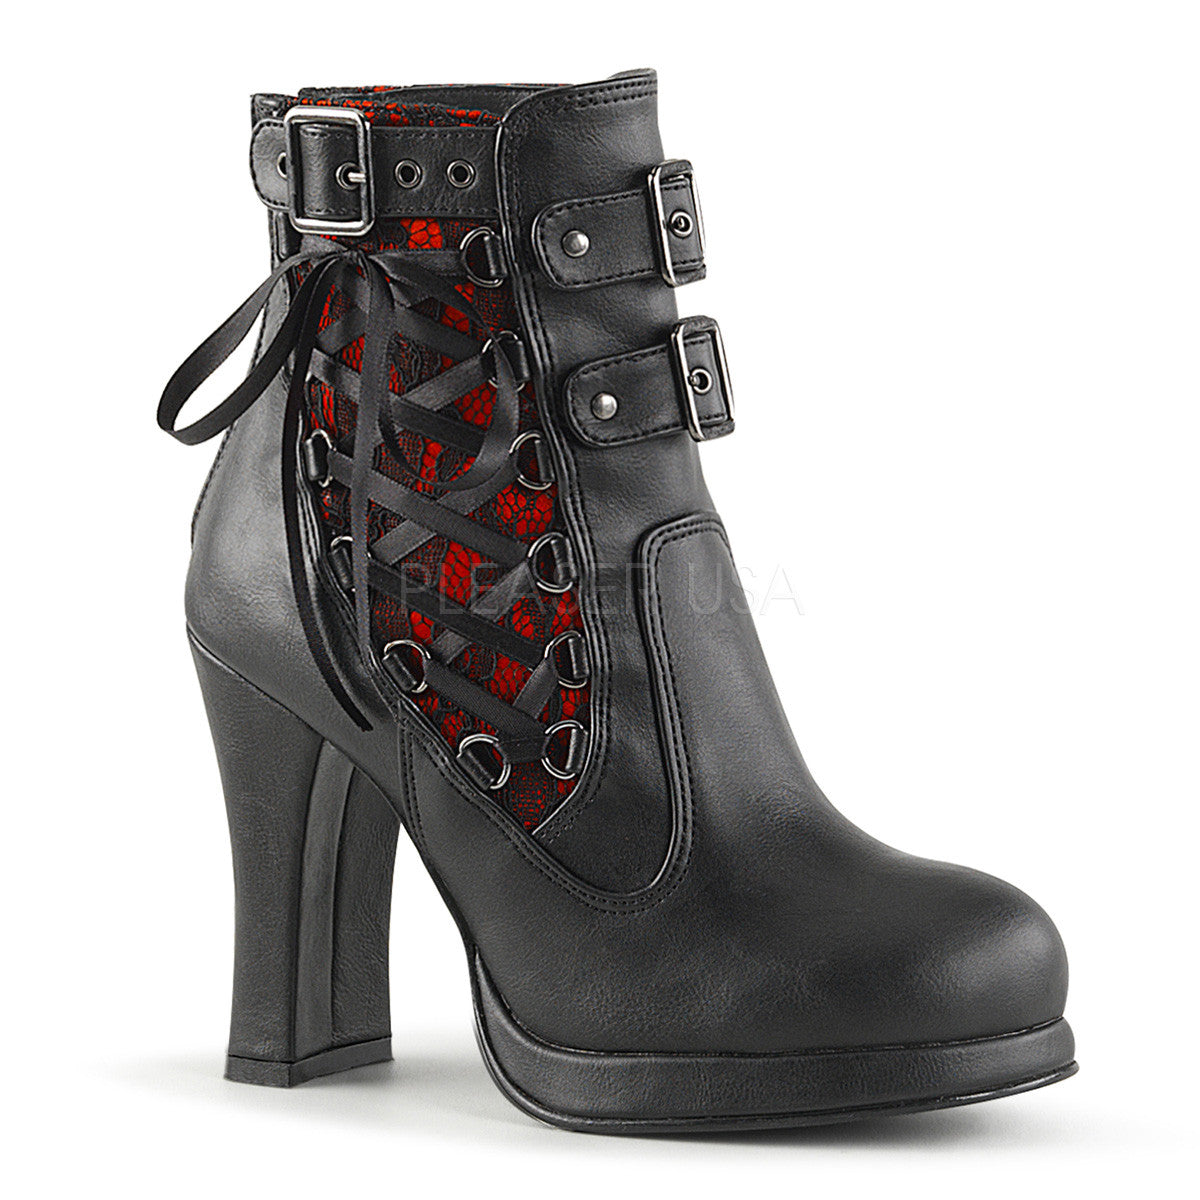 Demonia CRYPTO-51 Black Corset-Style Ankle Boots - Shoecup.com - 1